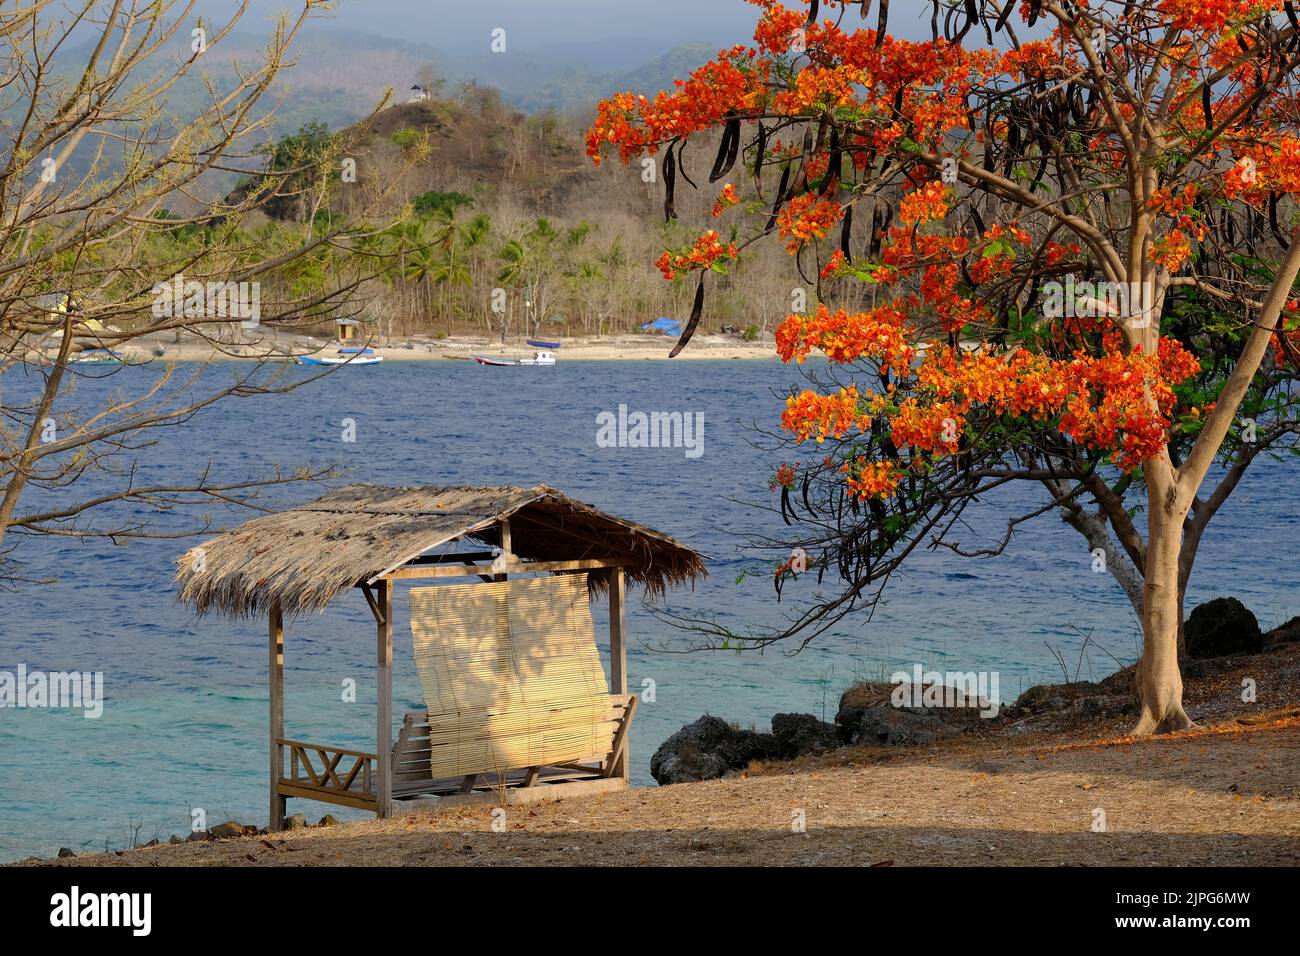 Indonesia Alor Island - Blooming Flame tree and coastal landscape Stock Photo